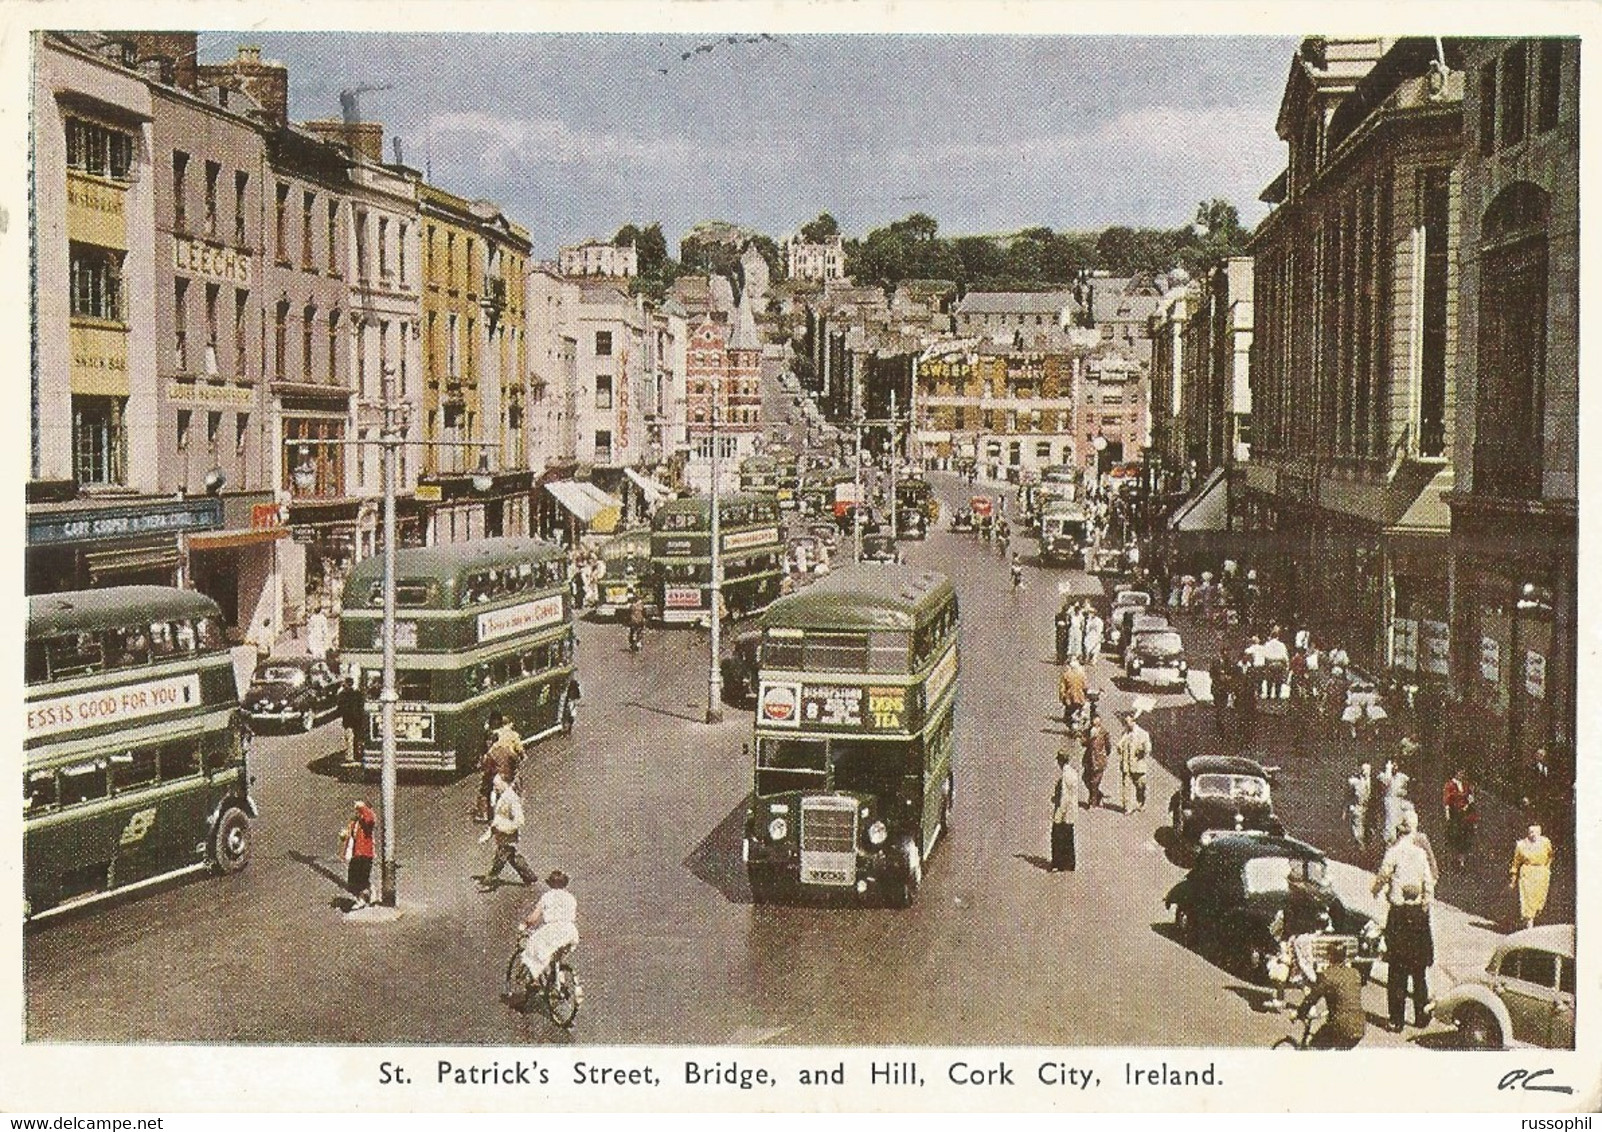 IRELAND - THE EMERALD ISLE - CORK - MARSHY PLACE - PC COLOR CARD N° 295  - 1958 - Cork